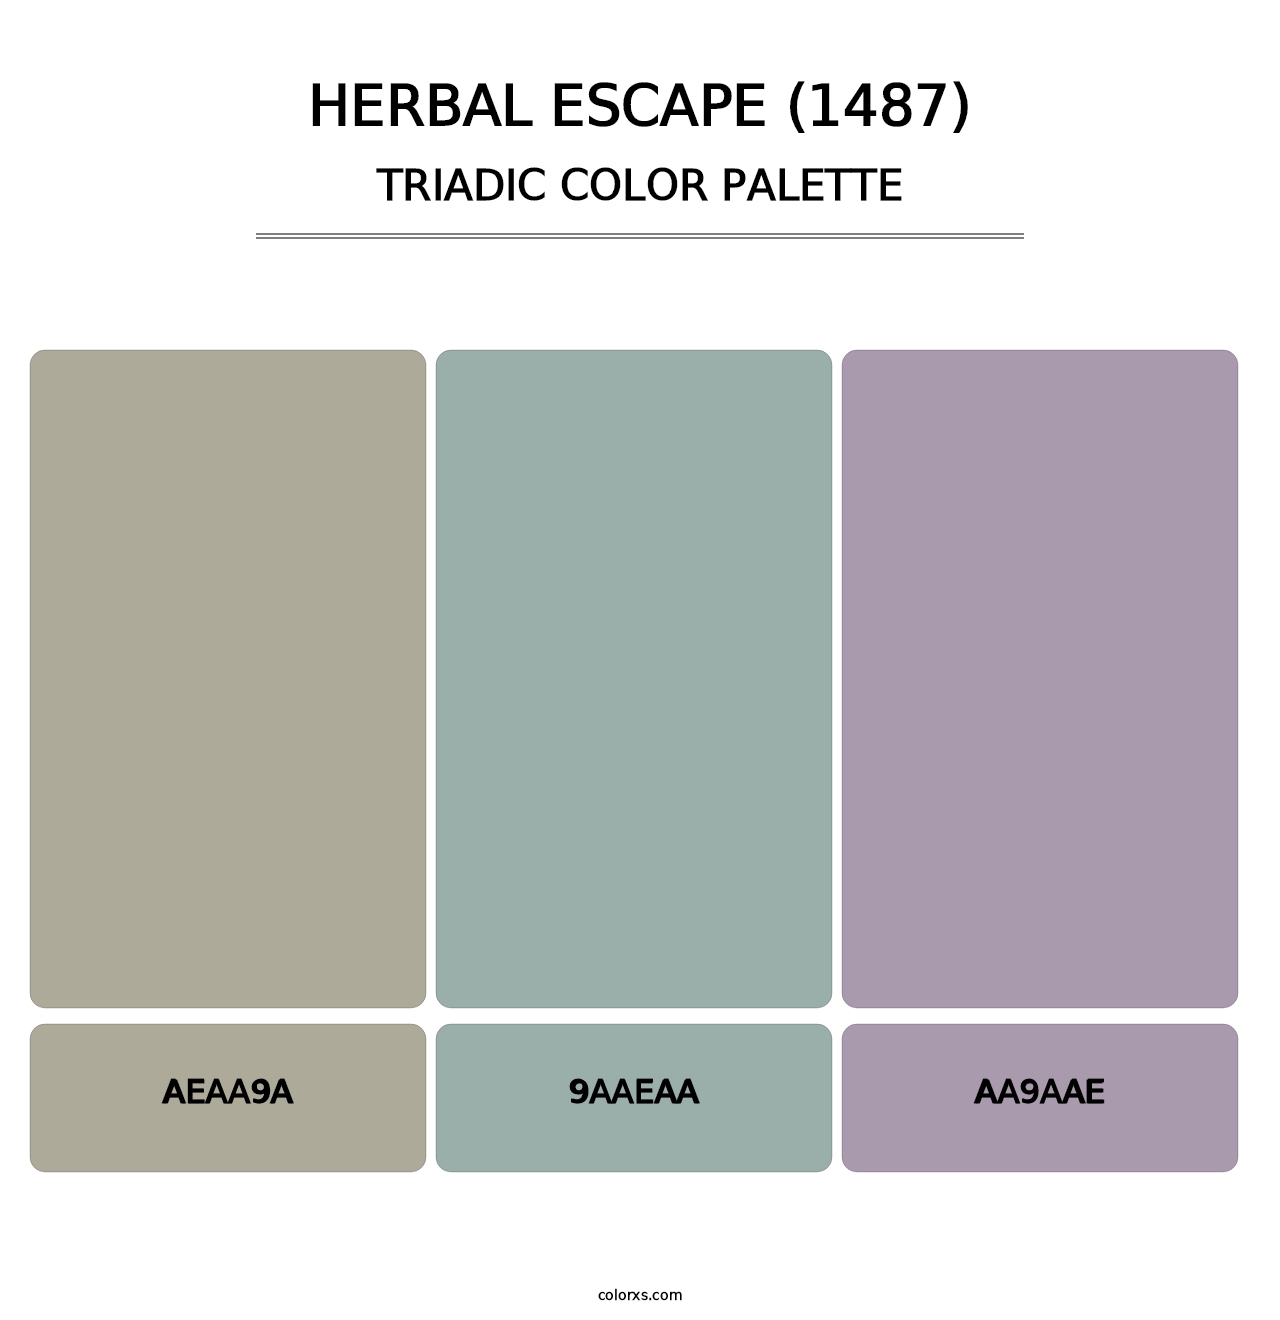 Herbal Escape (1487) - Triadic Color Palette